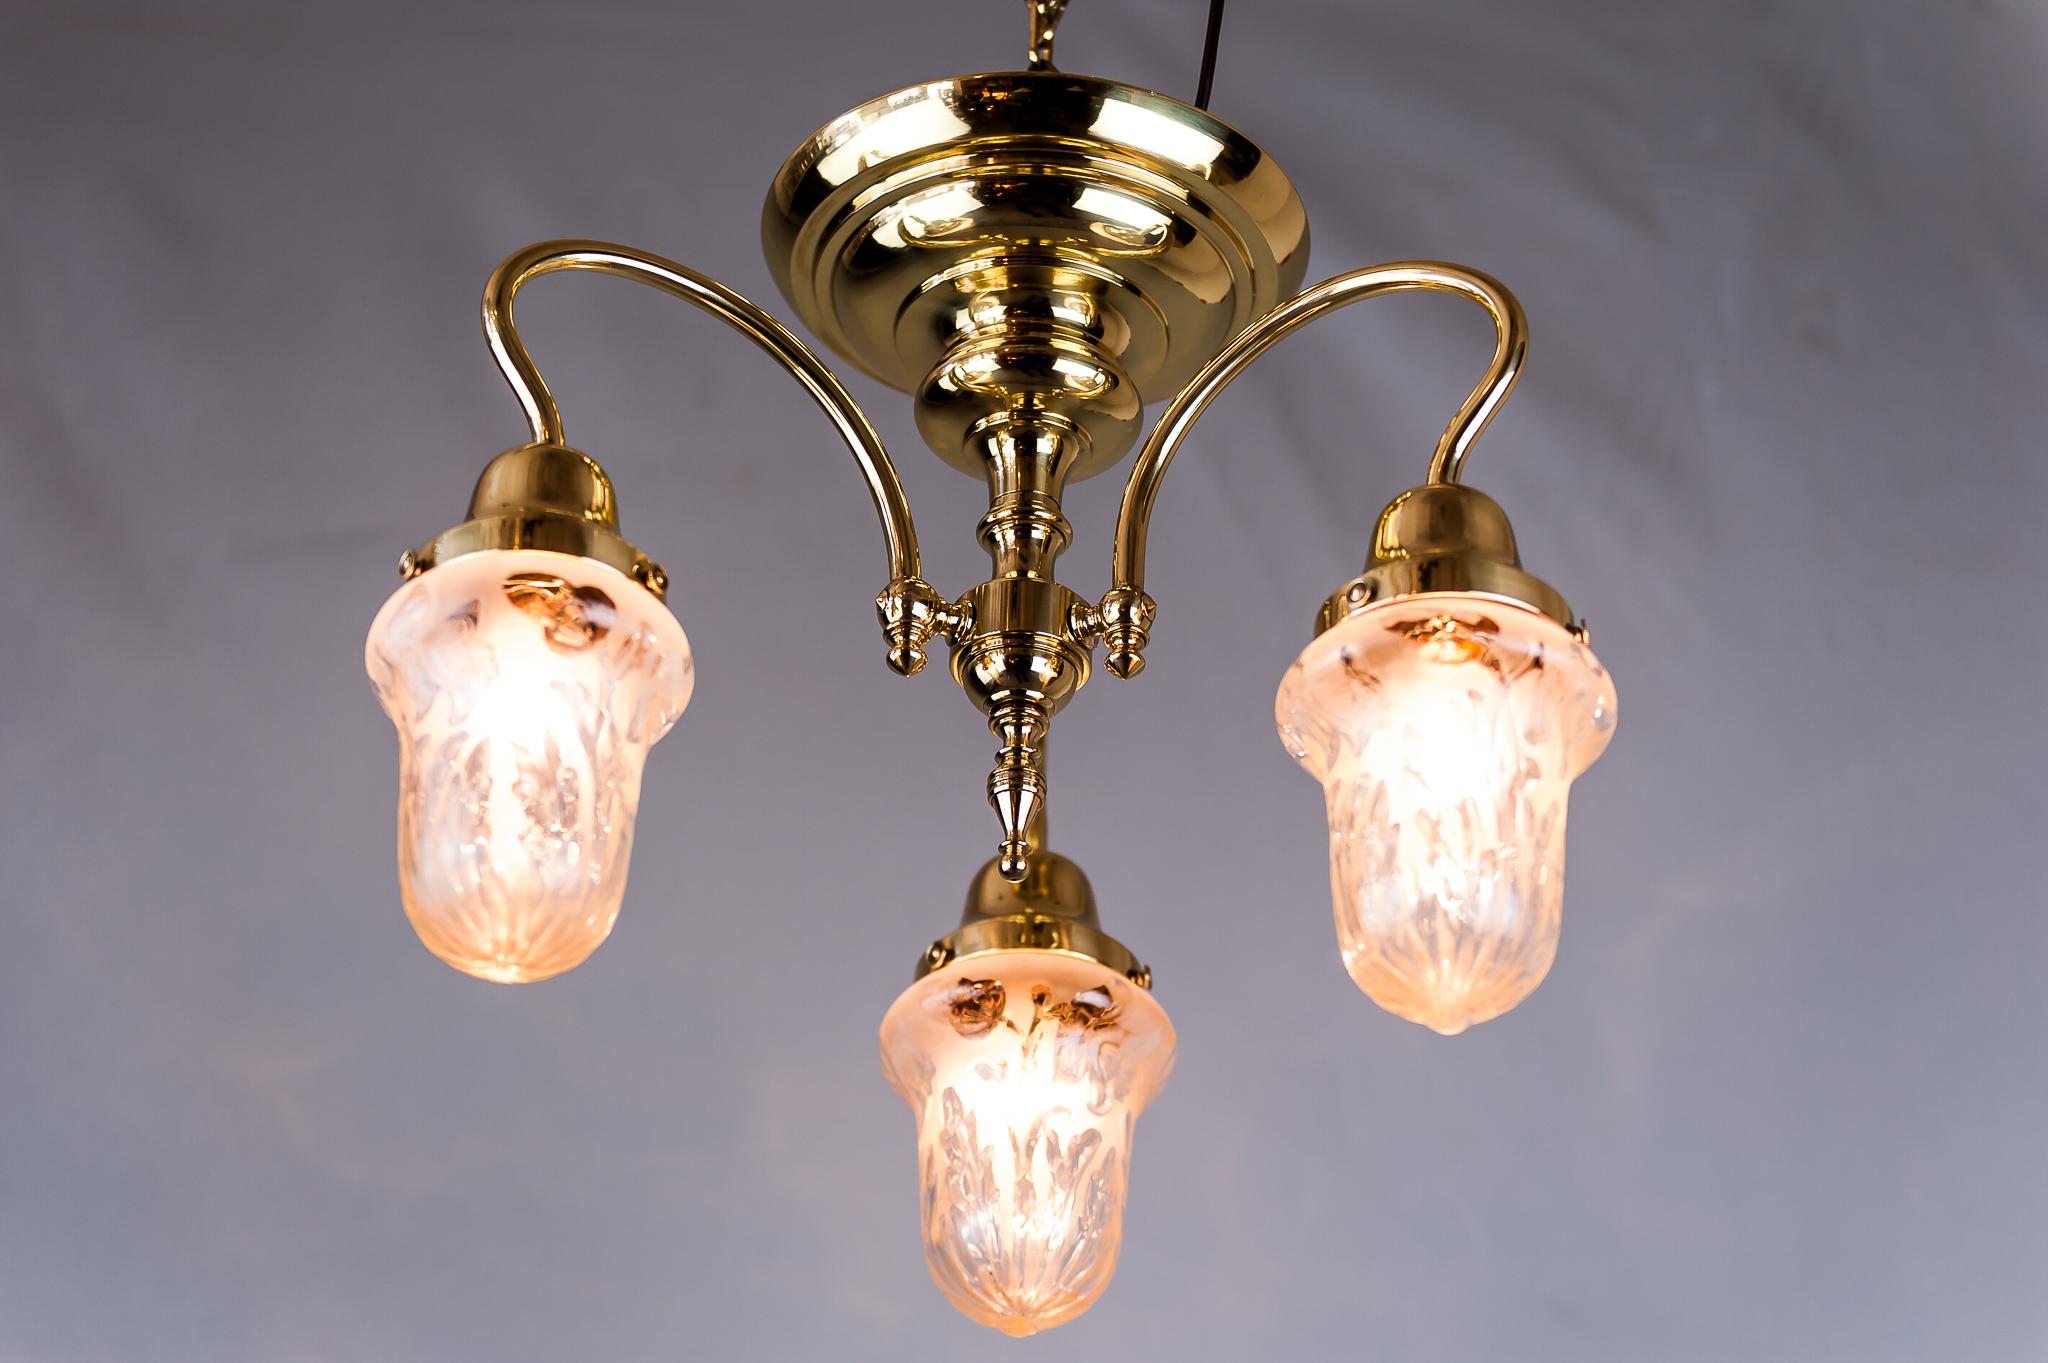 Brass Jugendstil Ceiling Lamp, circa 1908 with Original Glass Shades